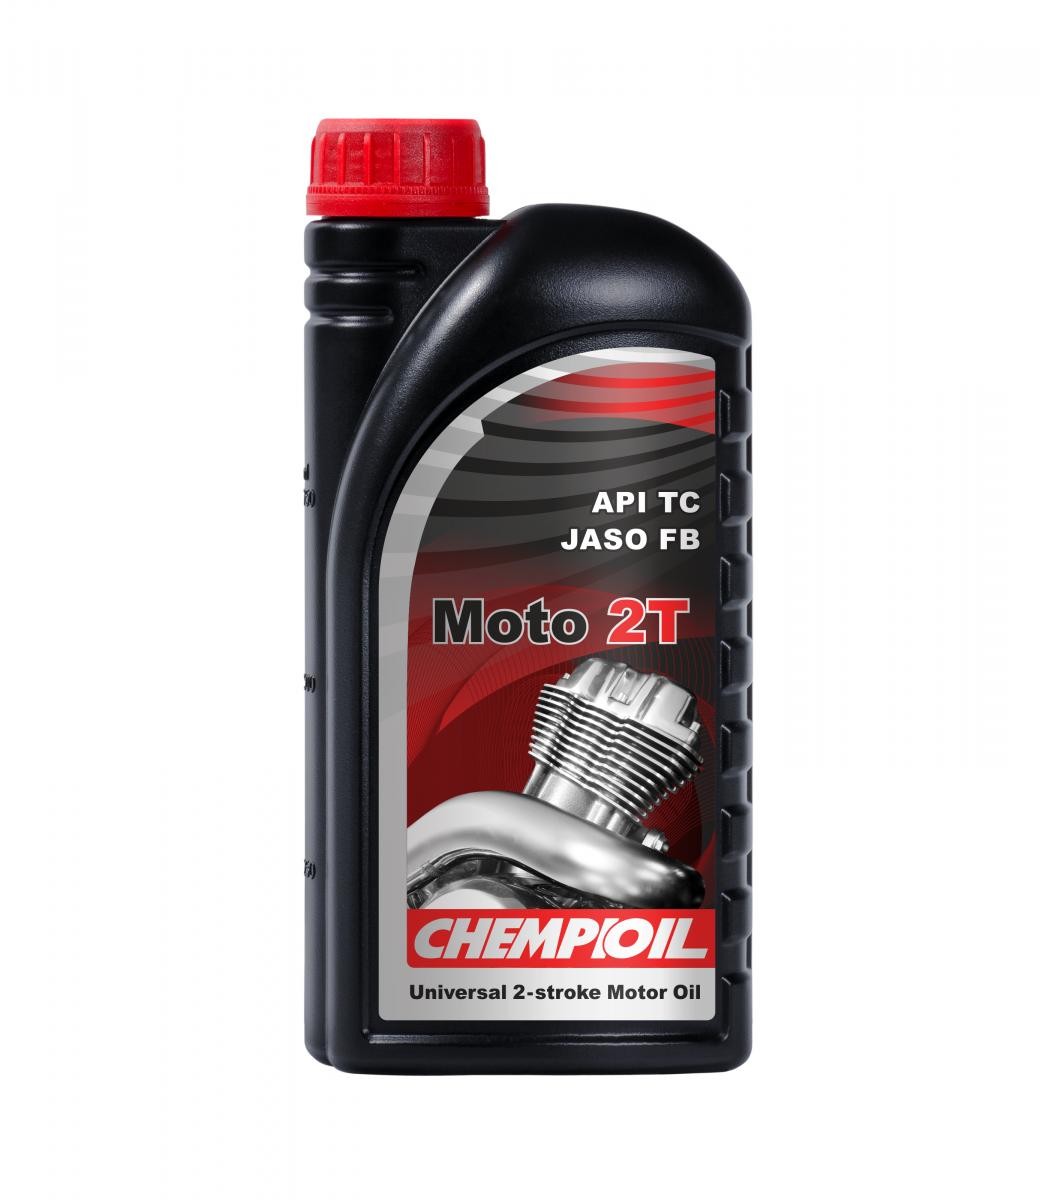 CHEMPIOIL MOTO, 2T 1l Motor oil CH9201-1RED buy